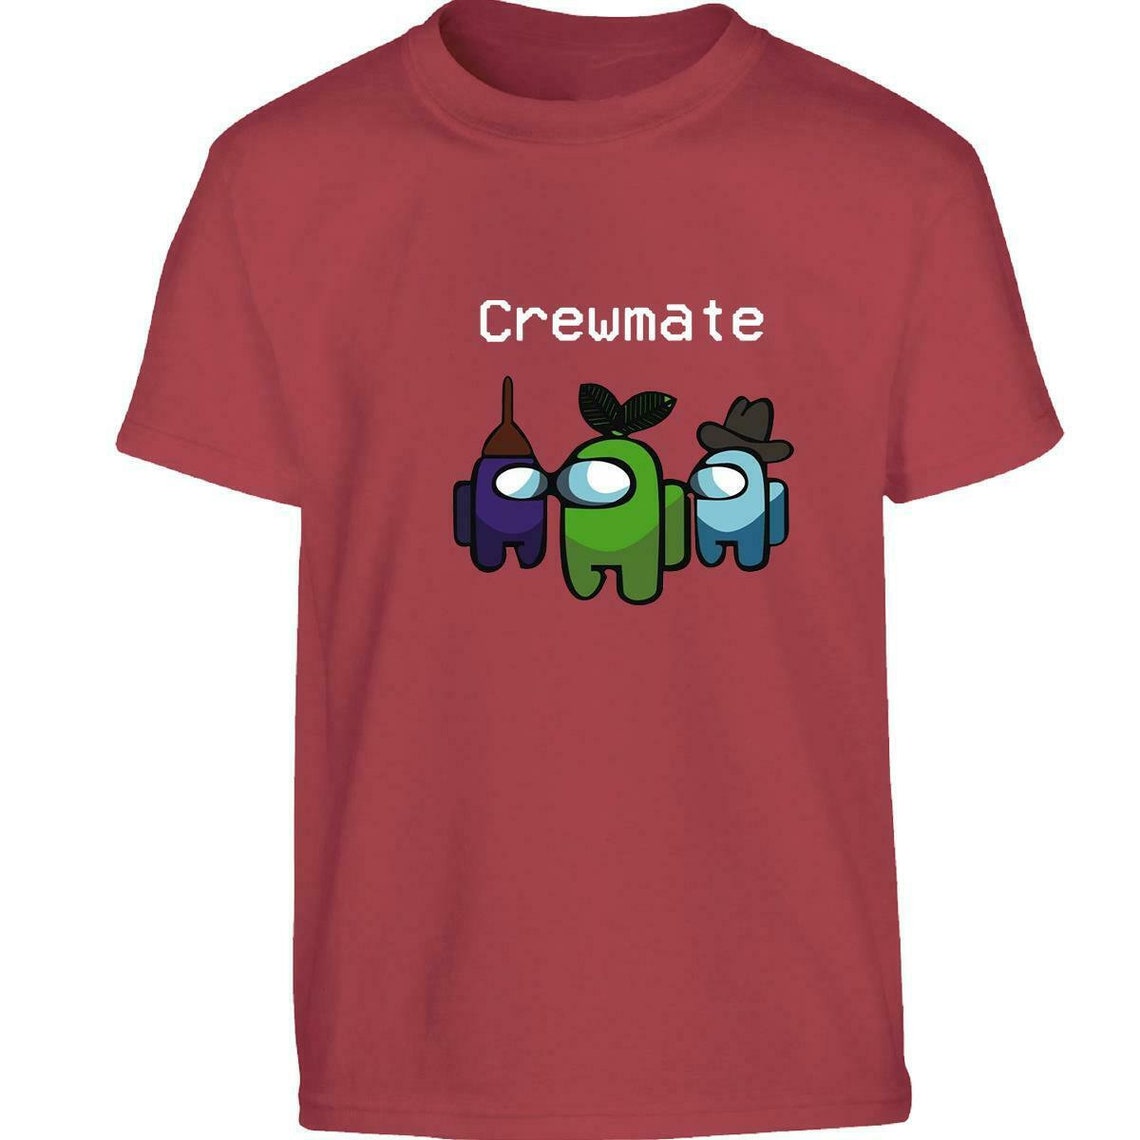 Crewmate Among Us T Shirts For Kids Kids Boy Girl Unisex Etsy